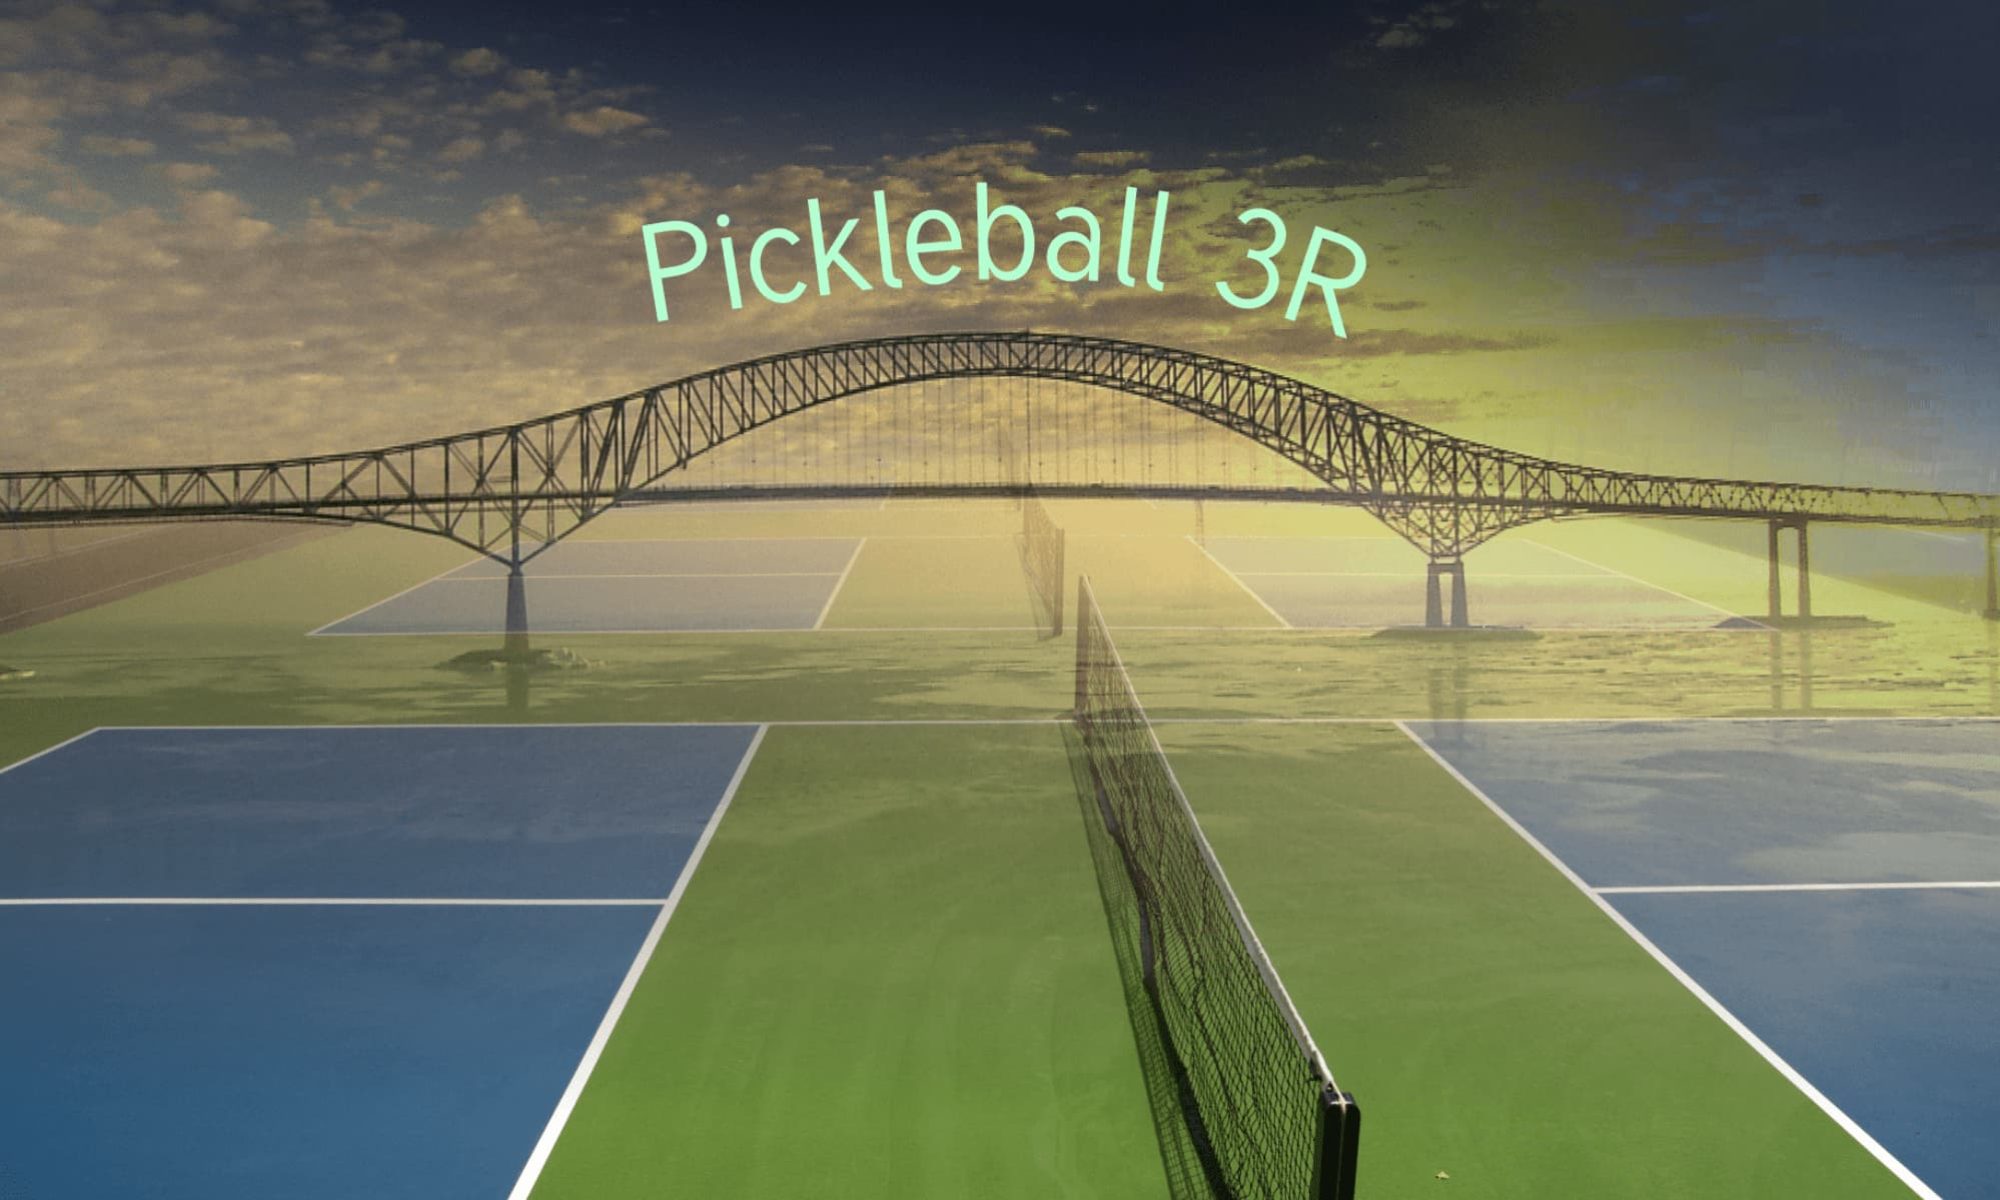 Association Pickleball 3R